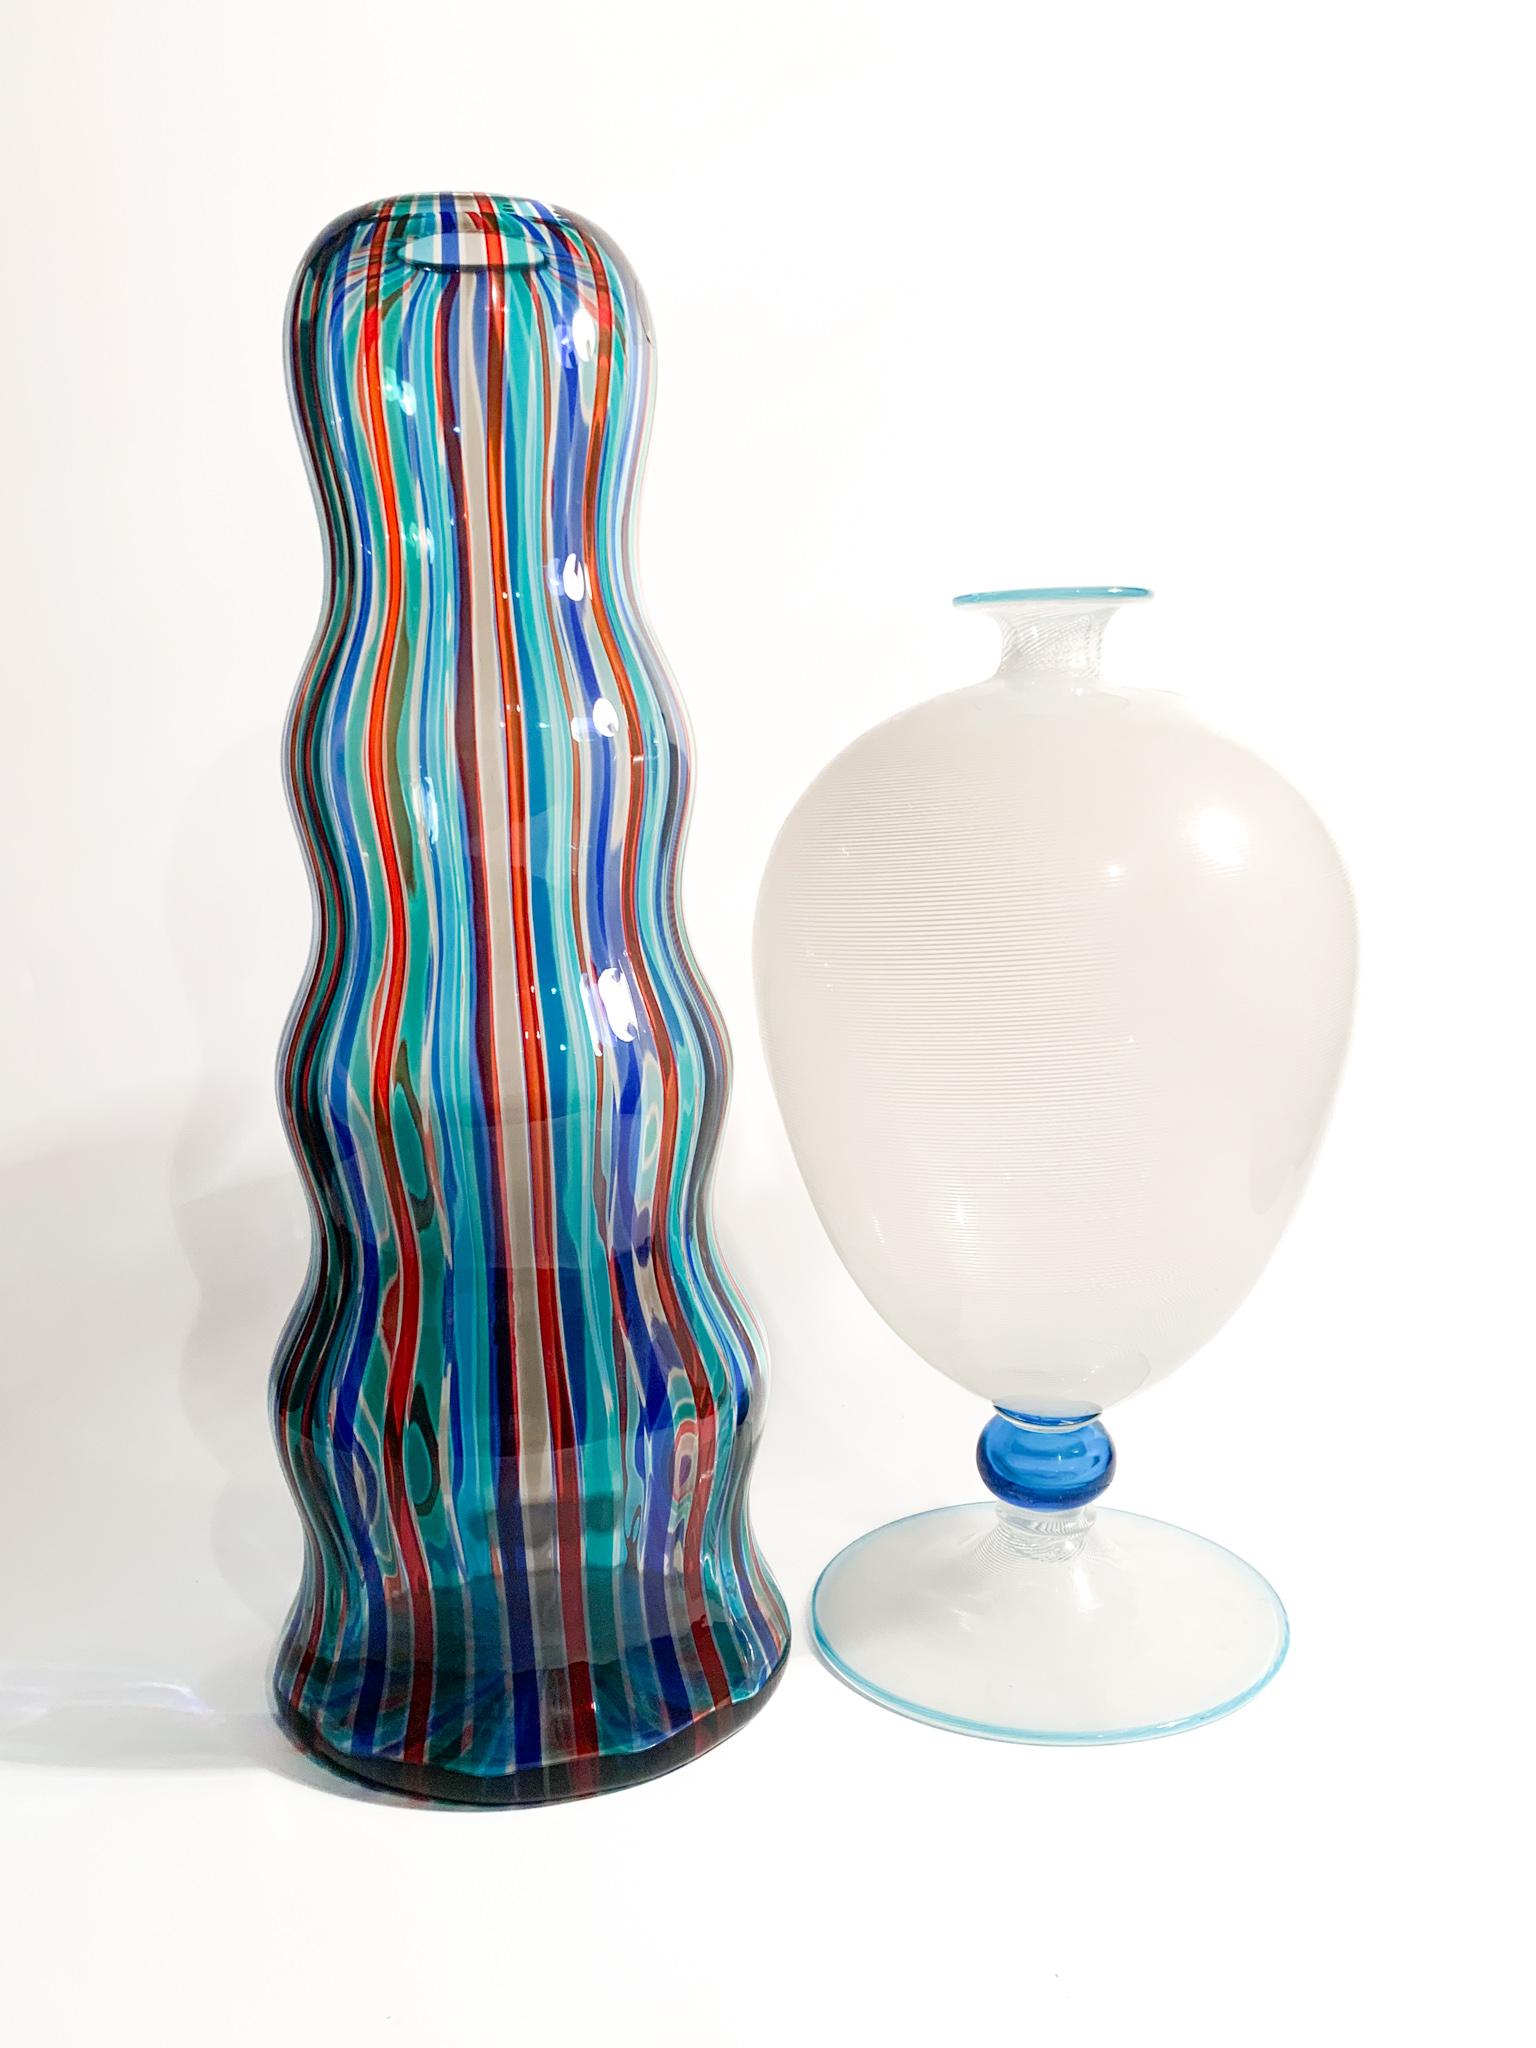 'Arado' Vase by Alessandro Mendini for Venini from 1988 For Sale 12